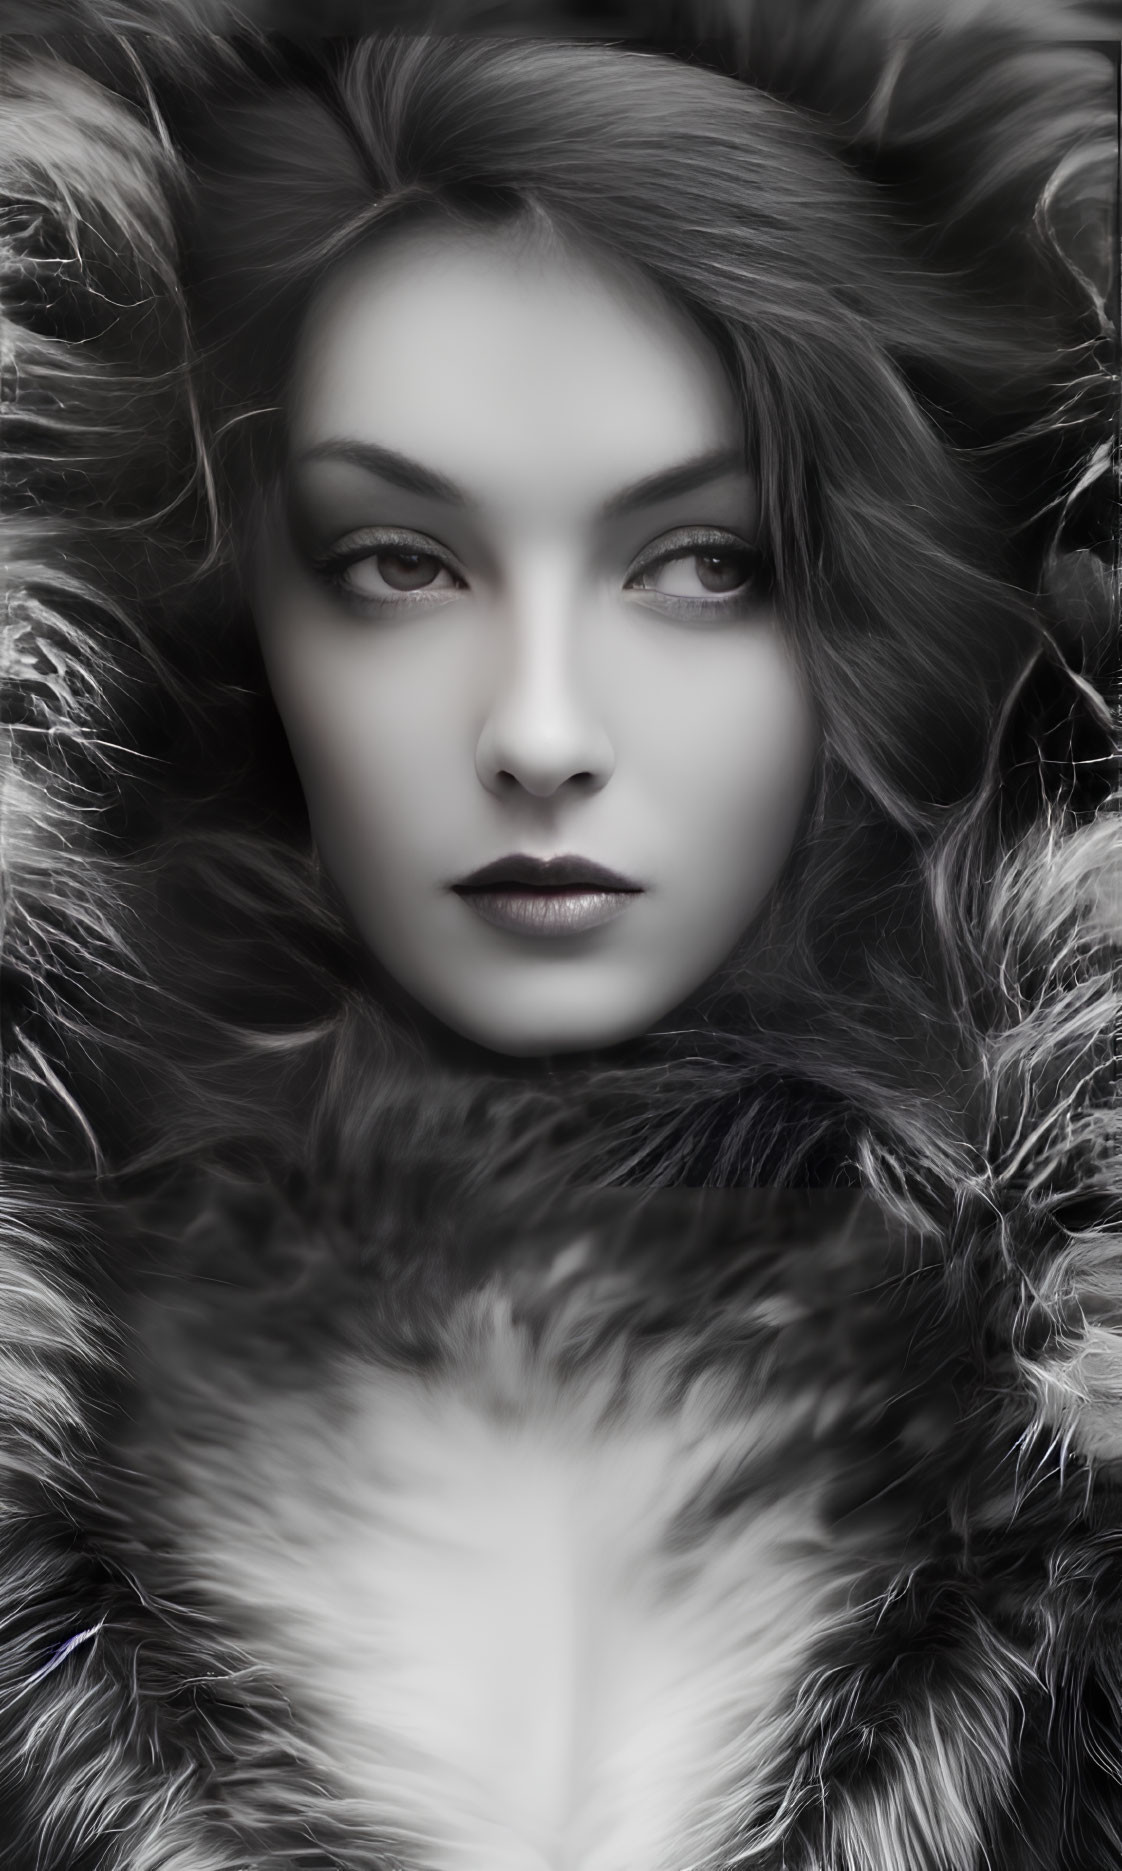 Monochrome portrait of woman in fur-like material